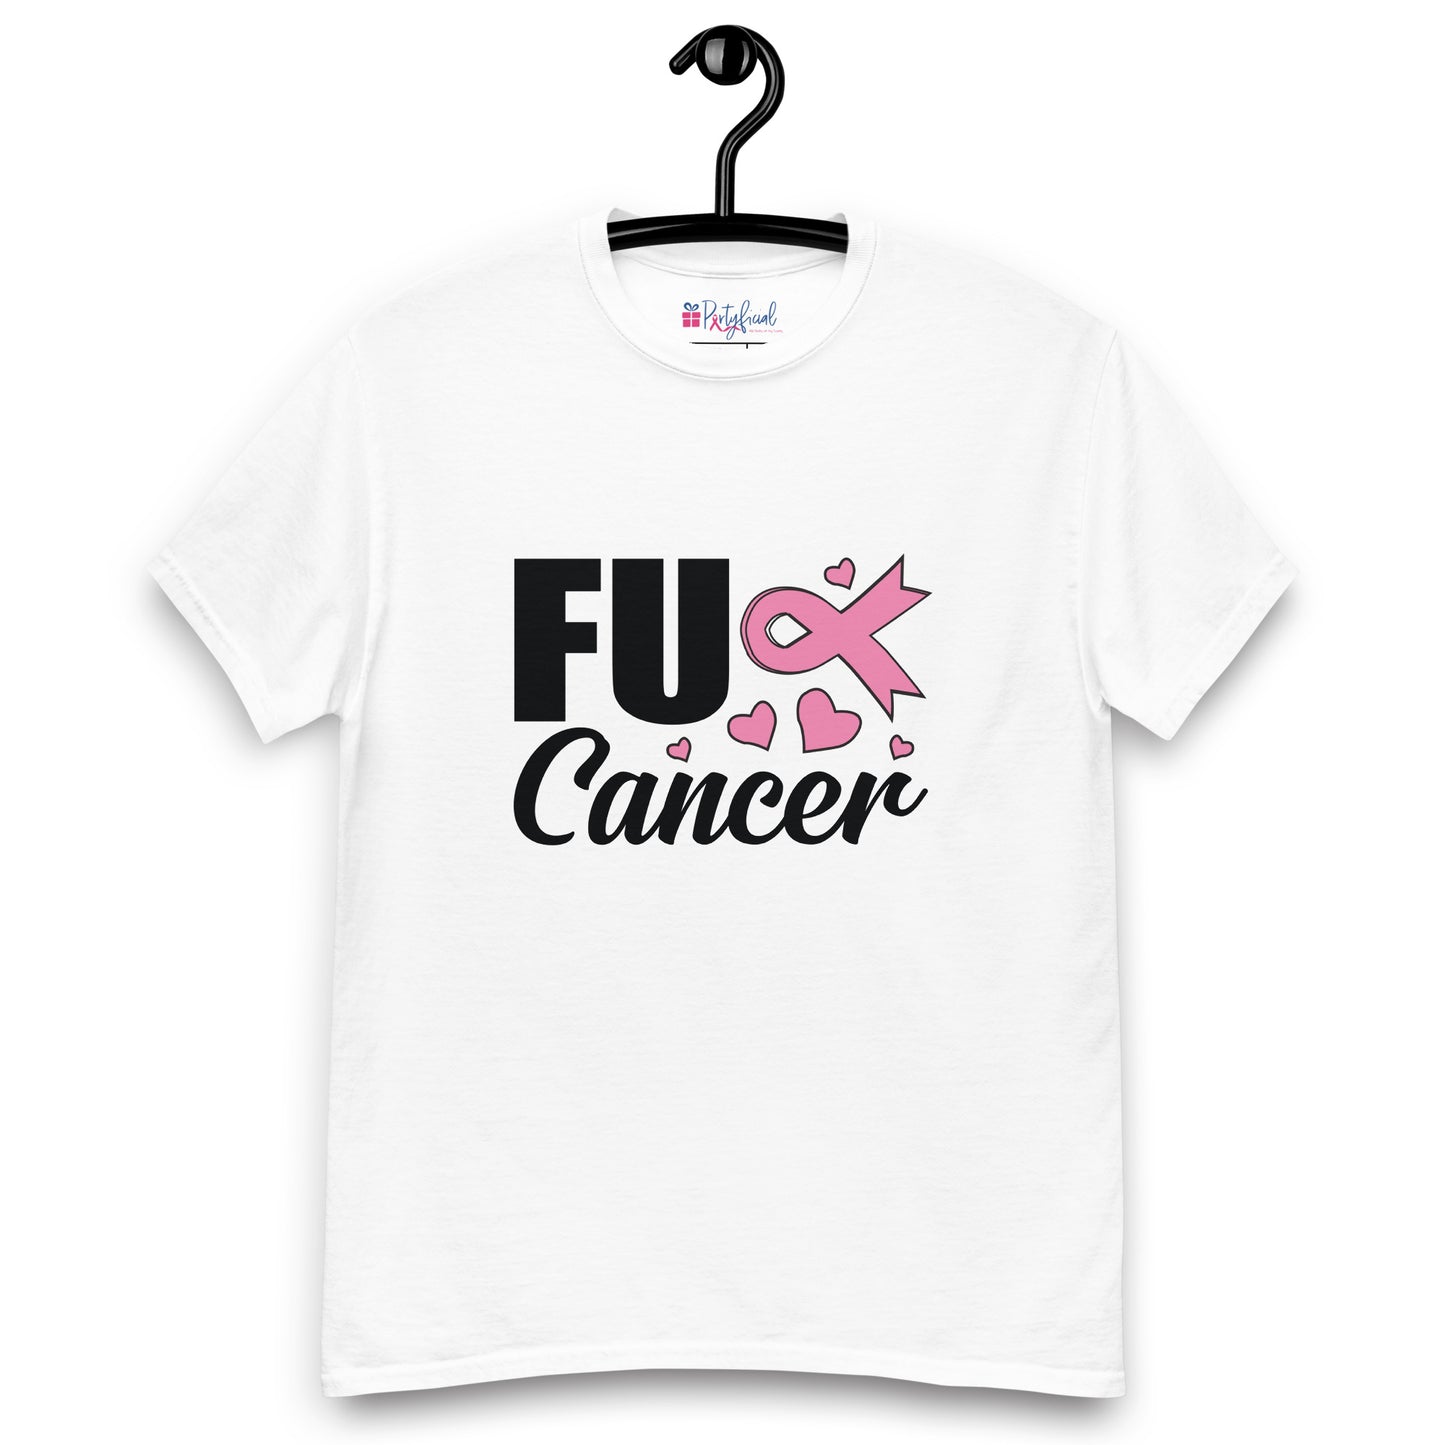 Fux Cancer tee